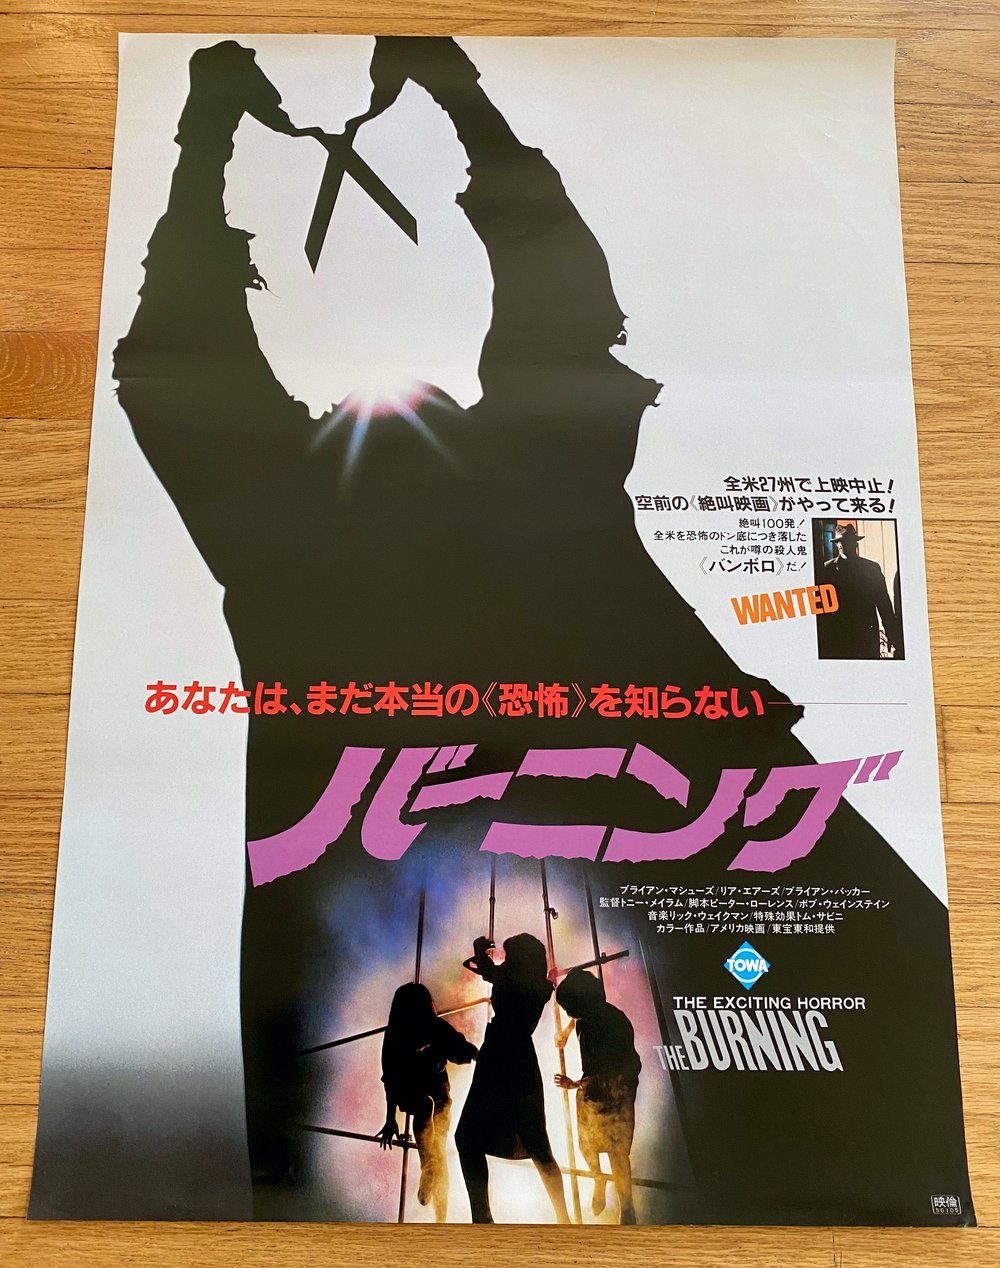 1981 THE BURNING Original Japanese B2 Movie Poster